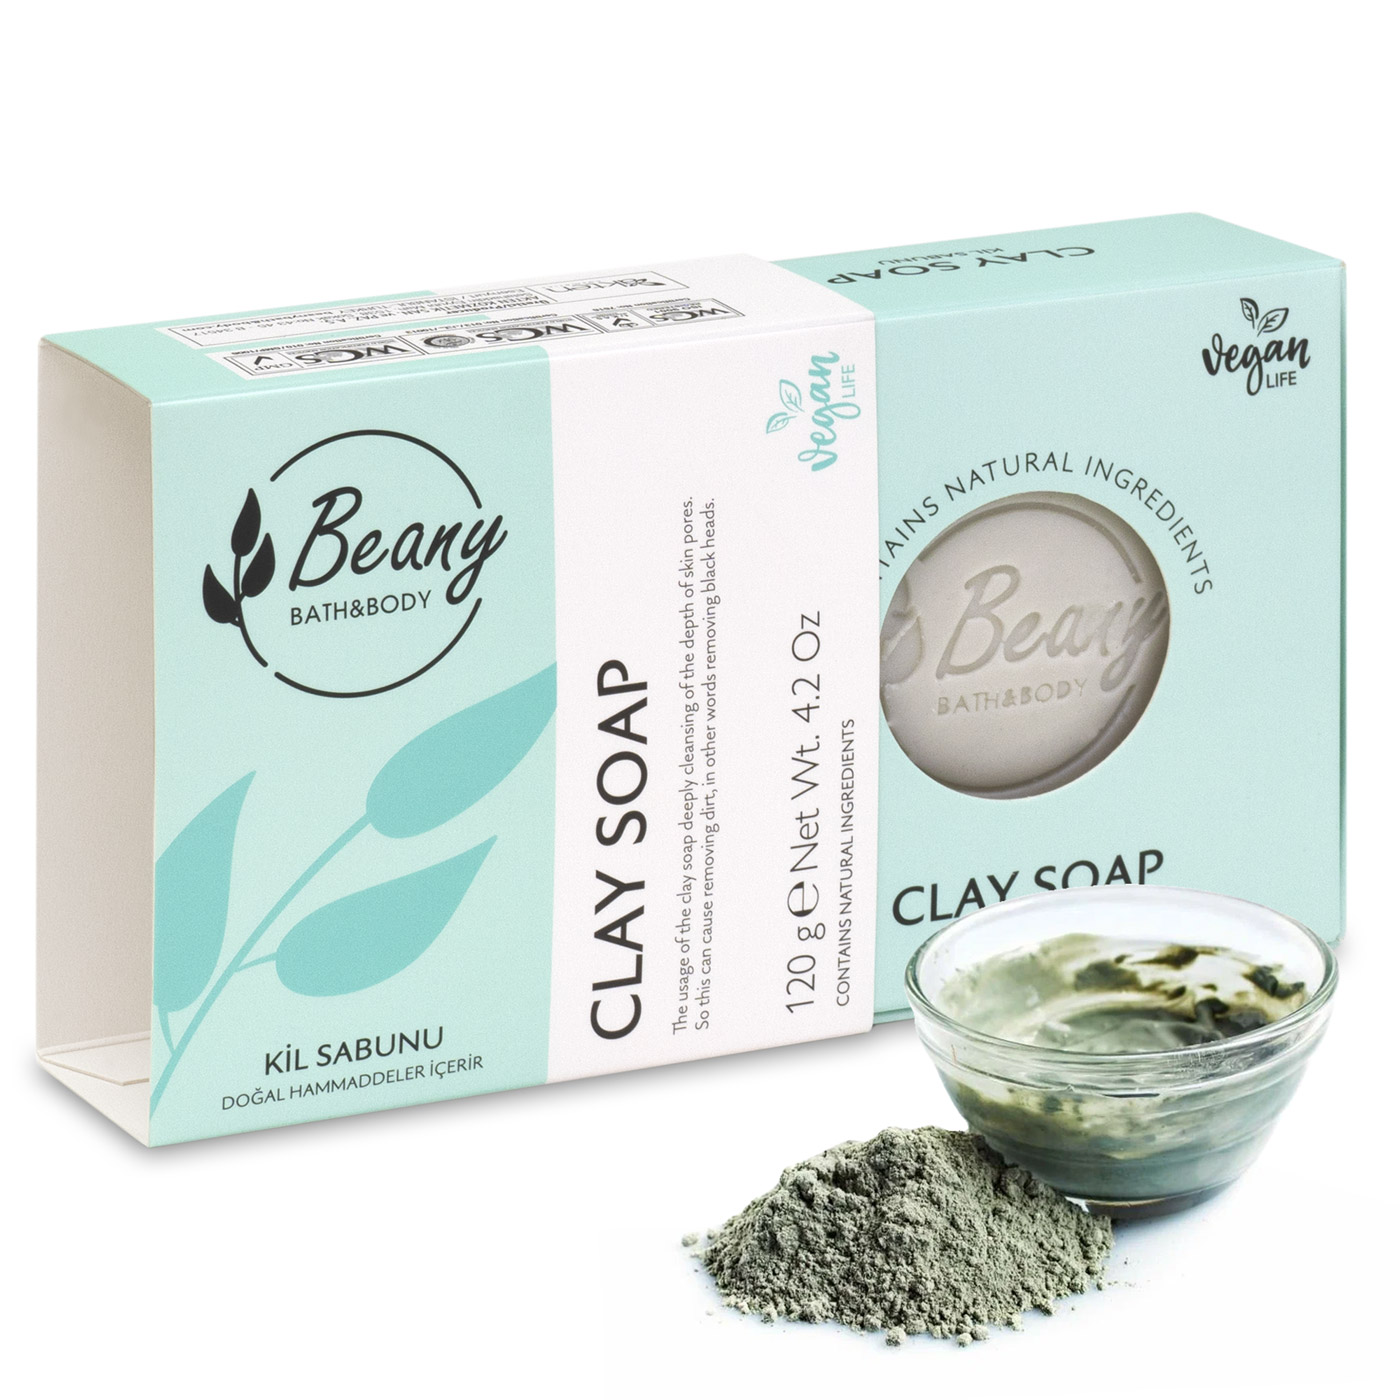 Мыло Beany твердое натуральное турецкое Clay Extract Soap с экстрактом глины мыло beany твердое натуральное турецкое clay extract soap с экстрактом глины 120г х 3шт